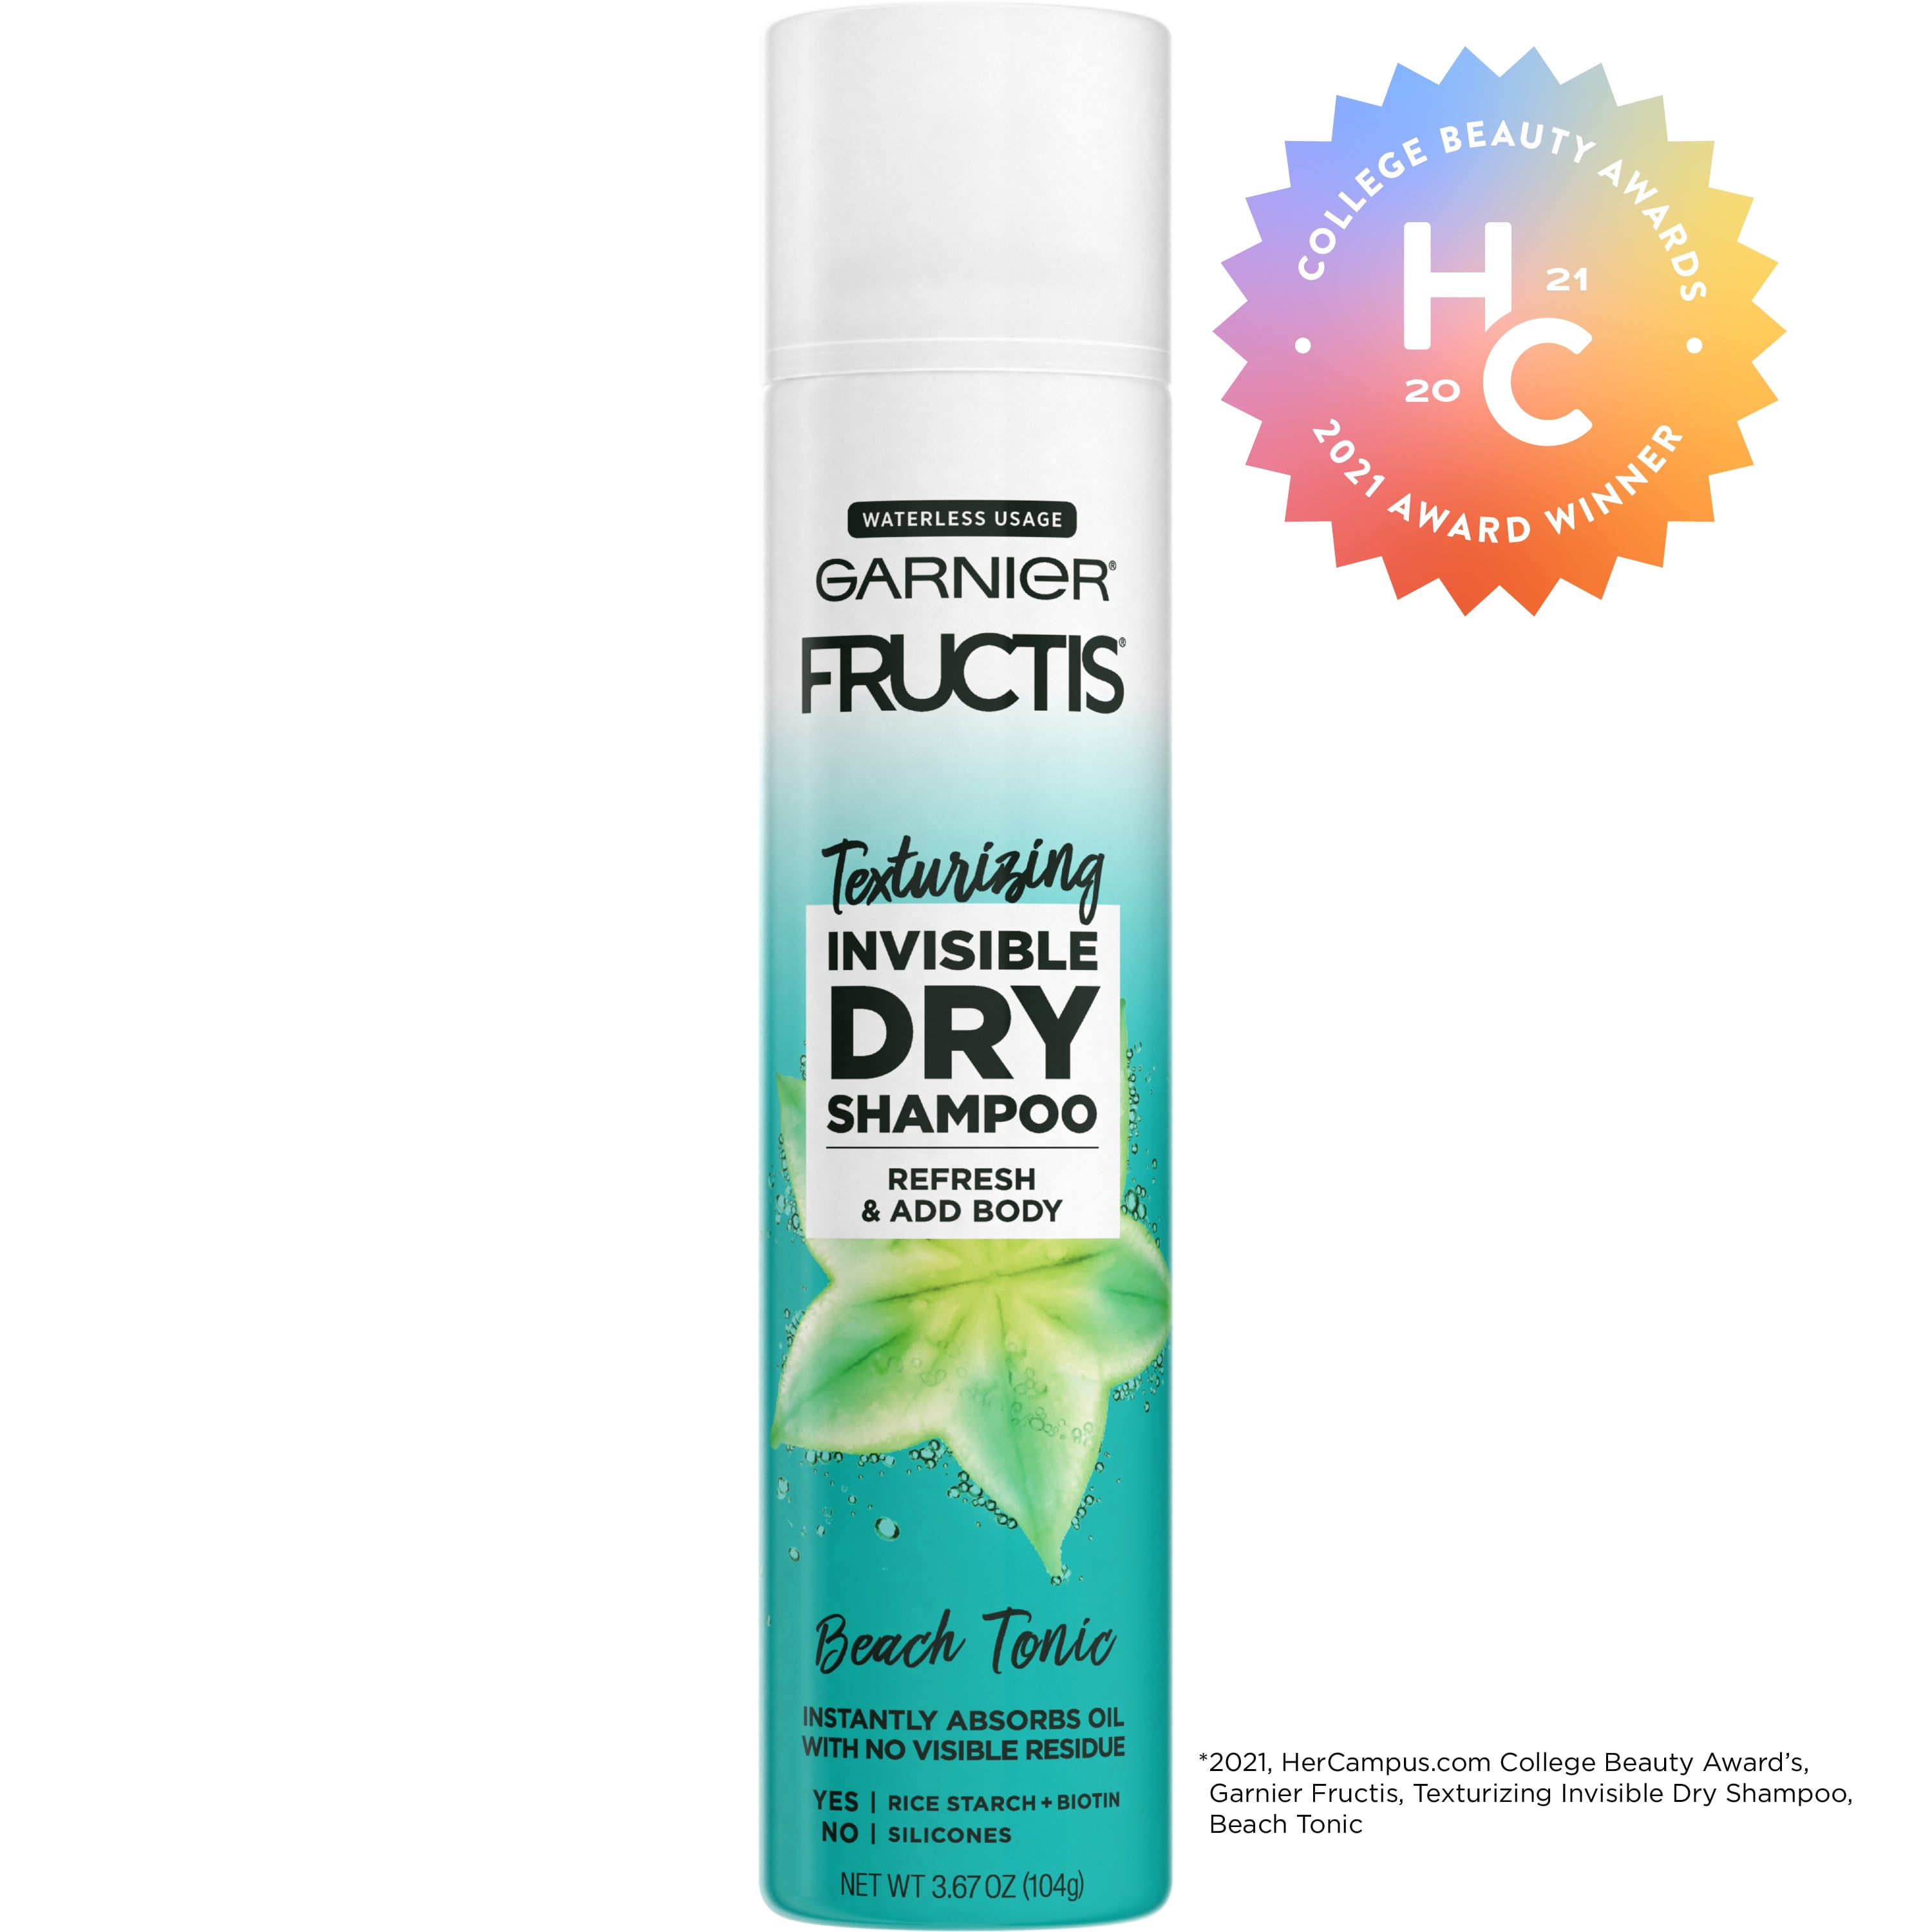 Garnier Fructis Texturizing Invisible Dry Shampoo, Beach Tonic,  oz -  